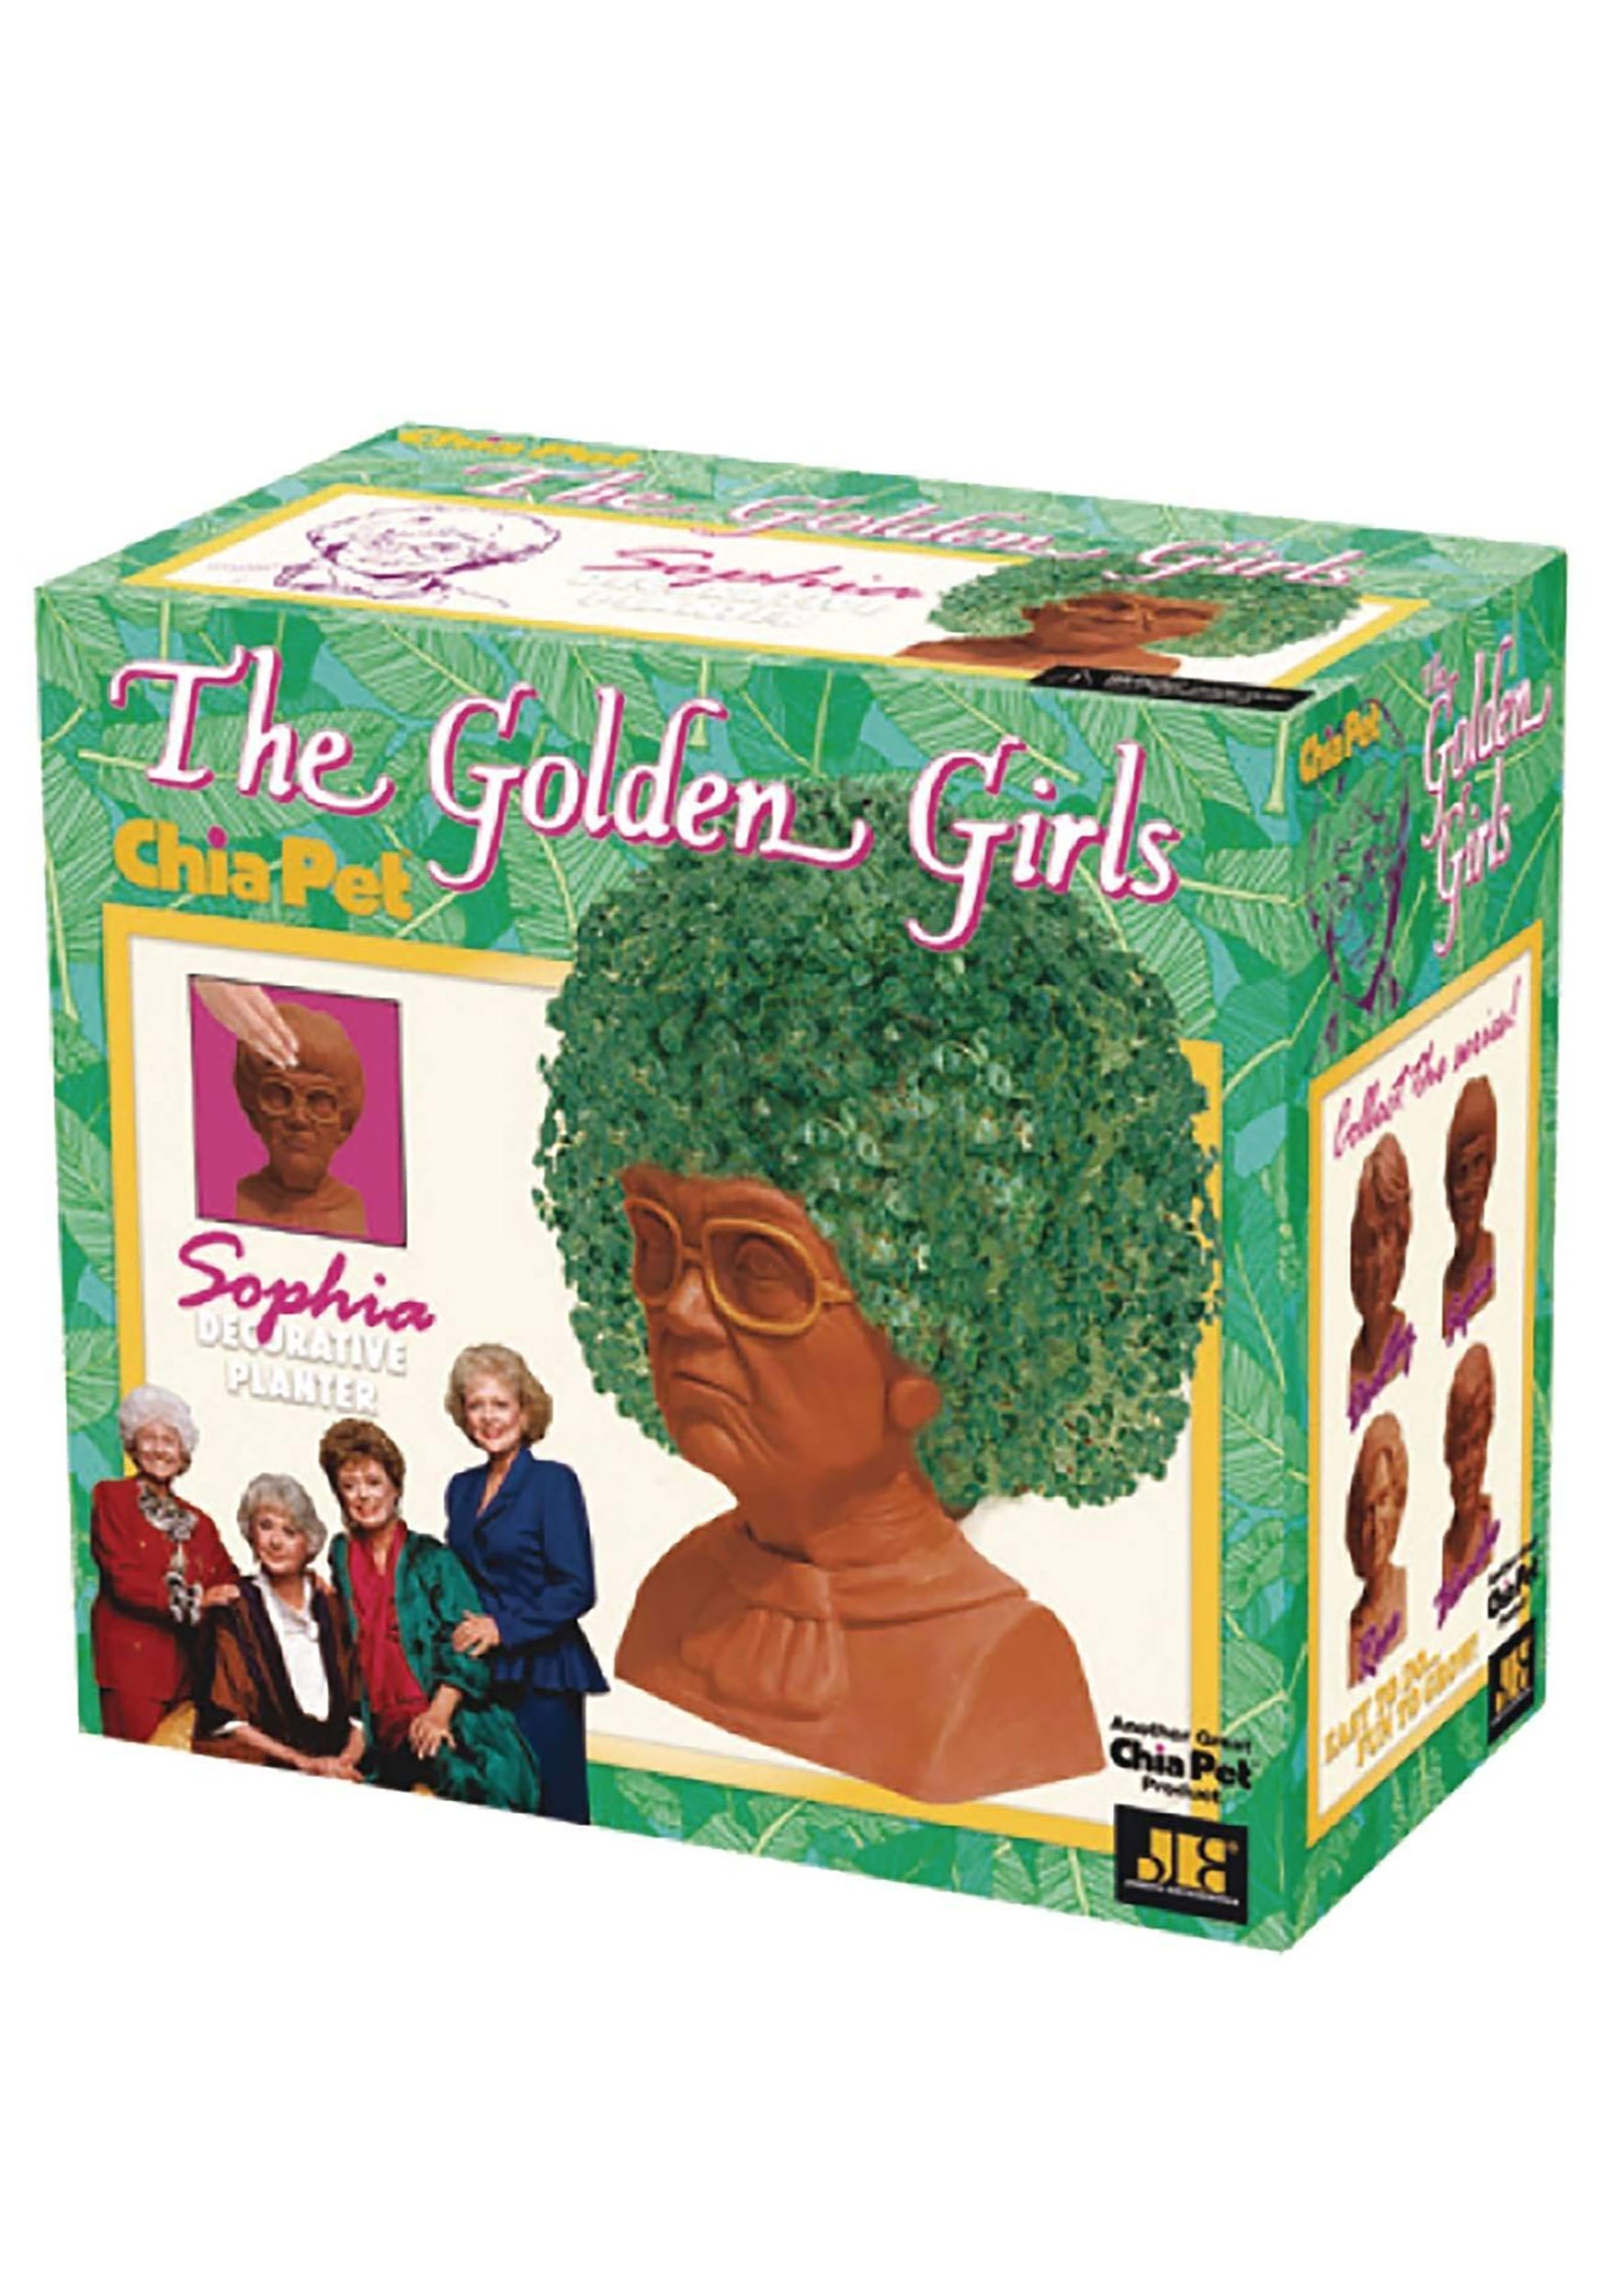 Golden Girls - Sophia Collectible Chia Pet